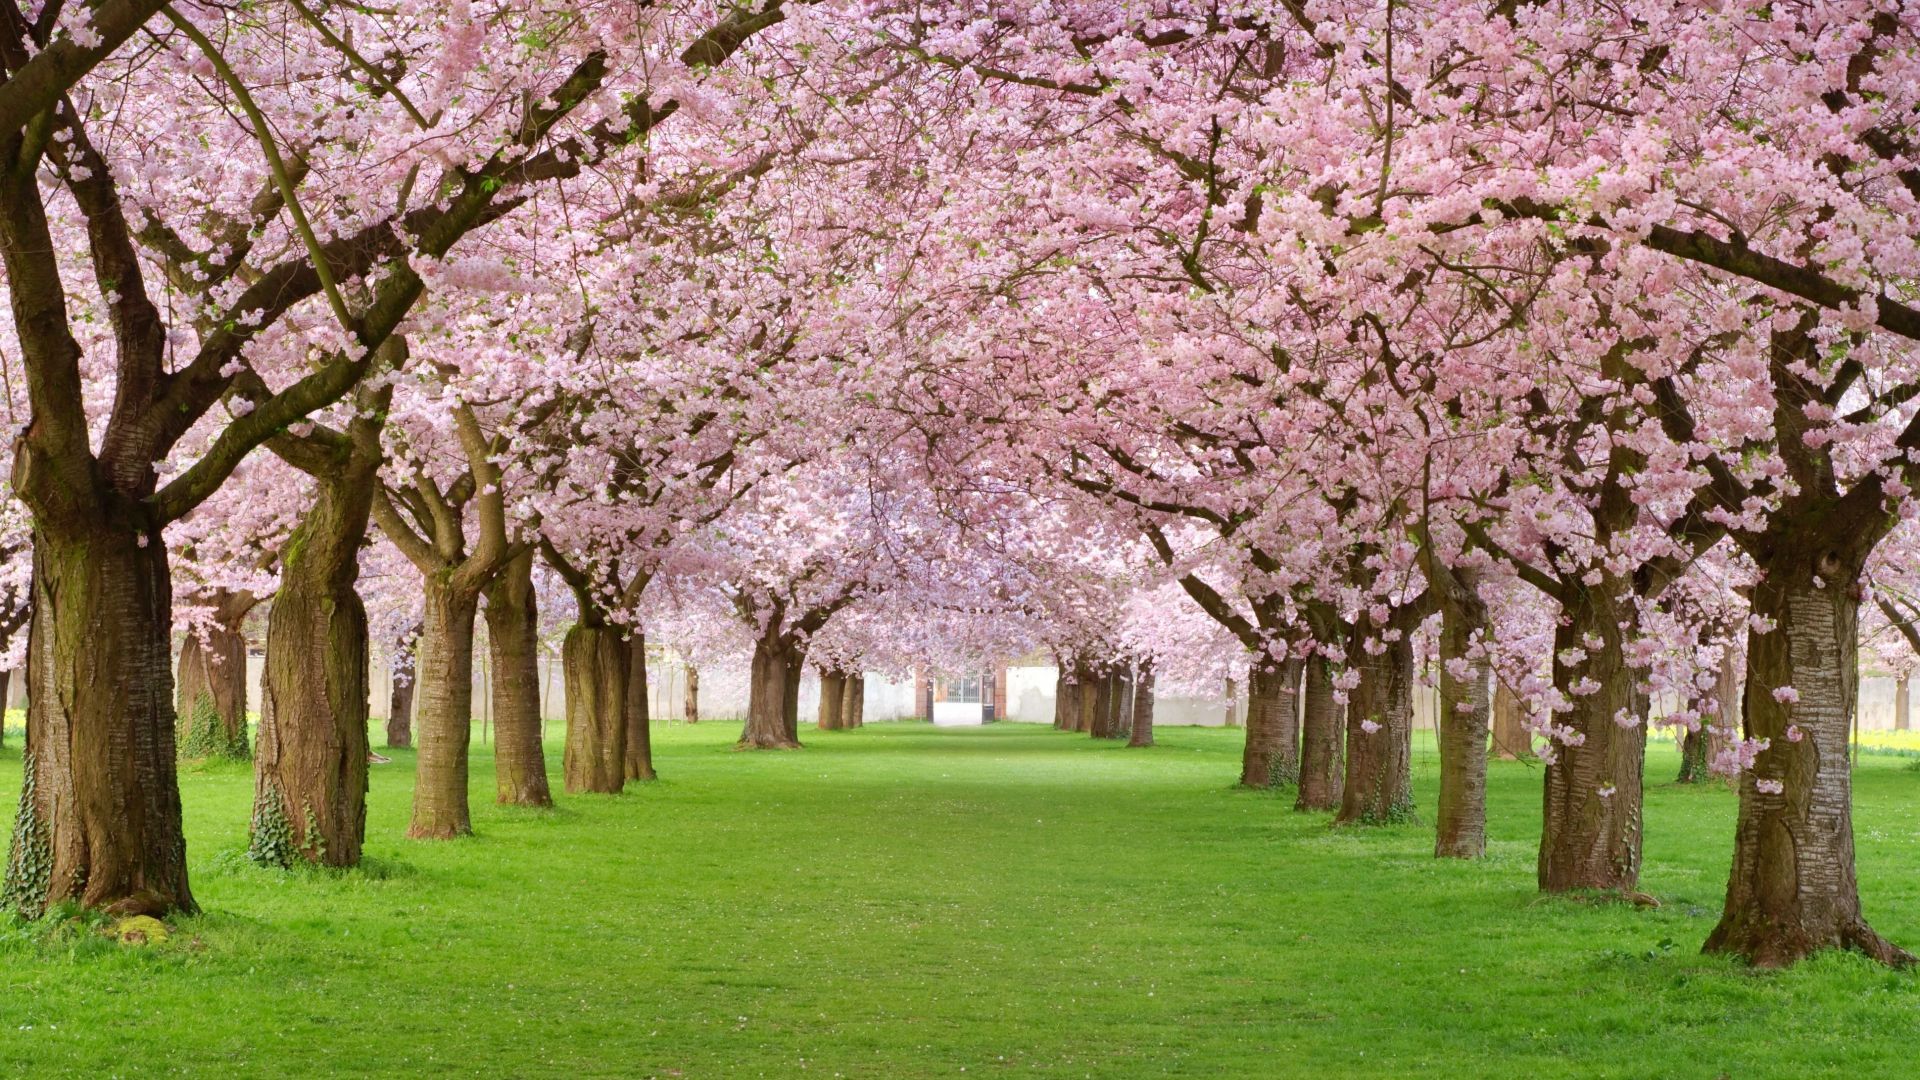 Деревья, 4k, HD, цветы, парк, розовый, Trees, 4k, HD wallpaper, blossom, park, pink (horizontal)